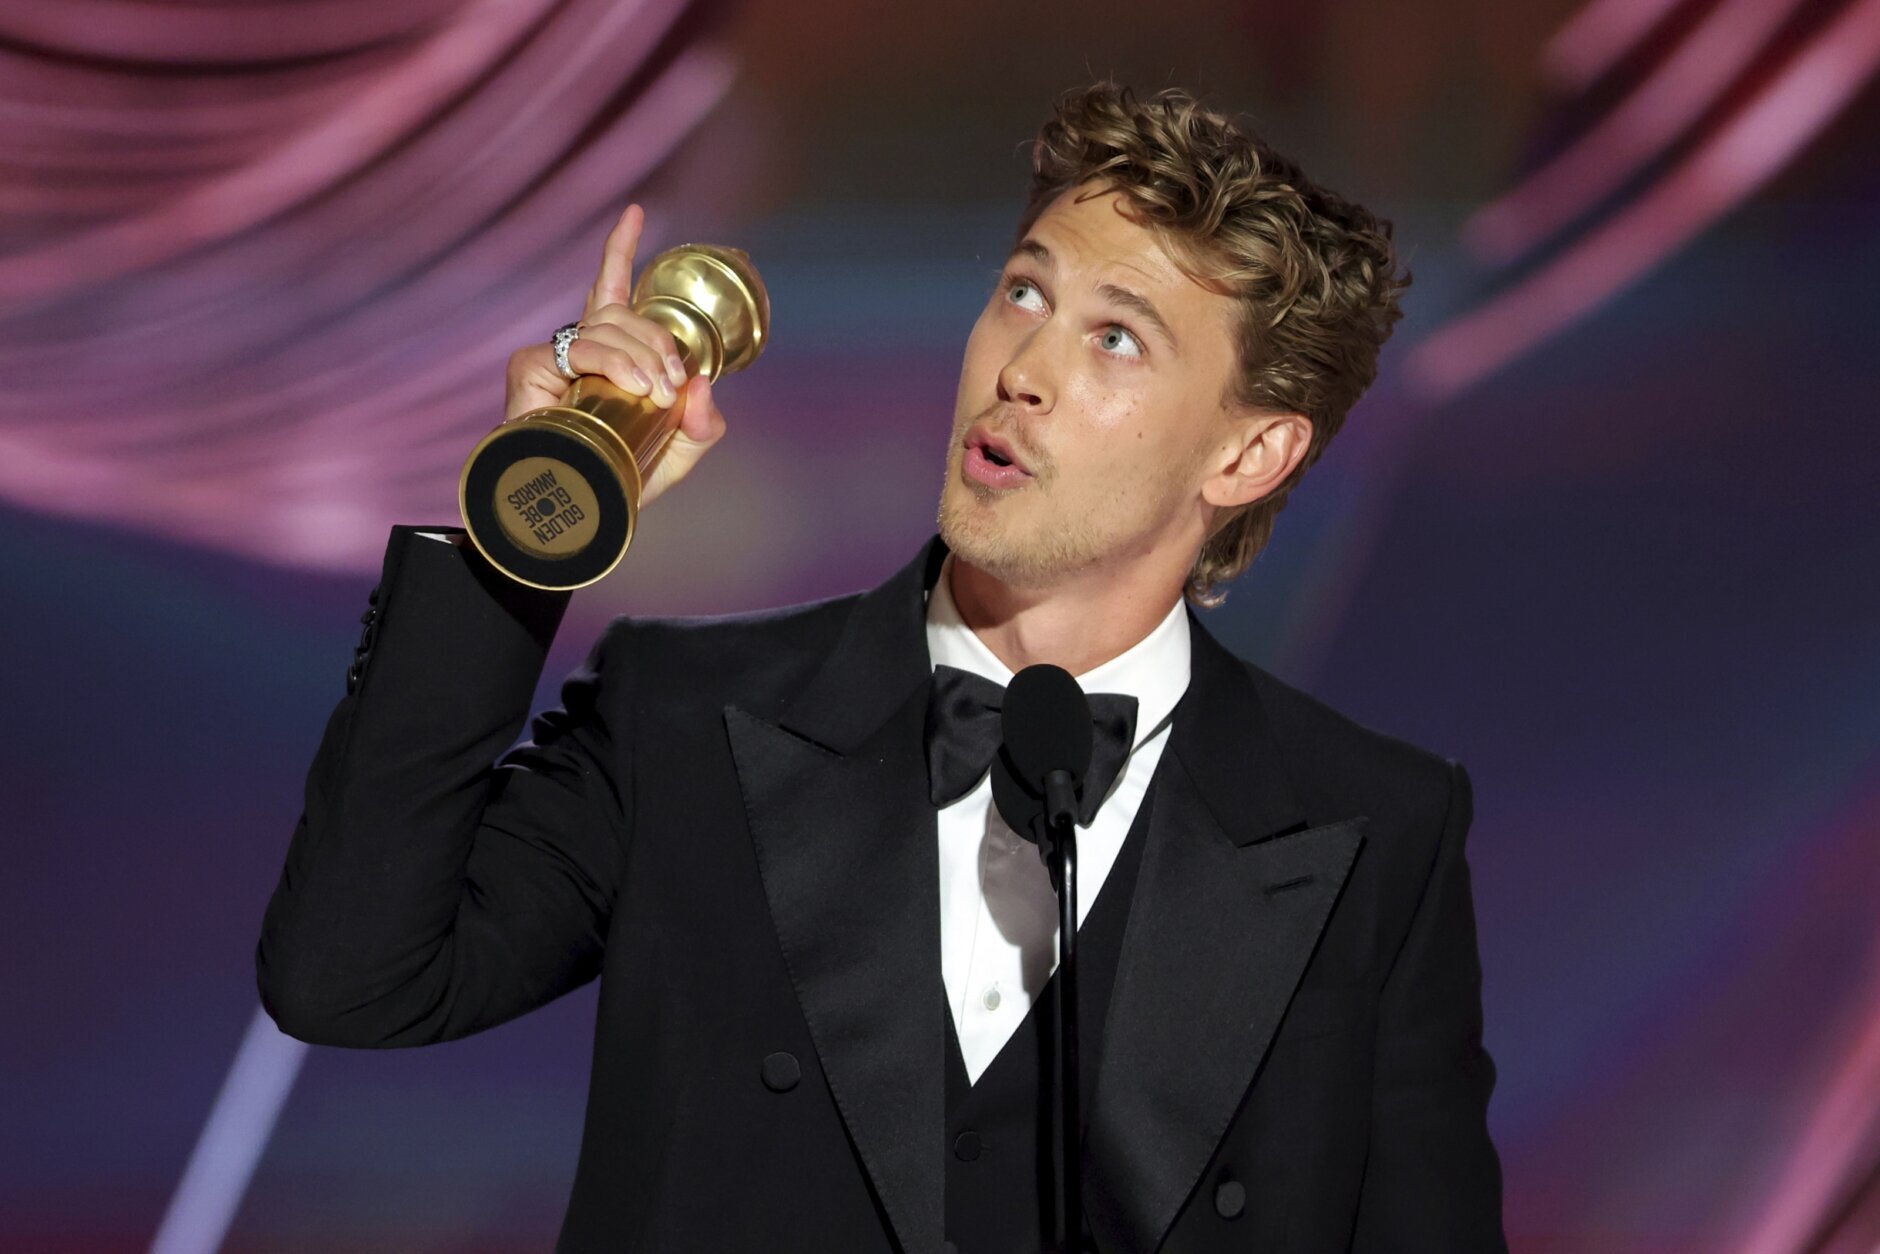 80th Annual Golden Globe Awards - Show